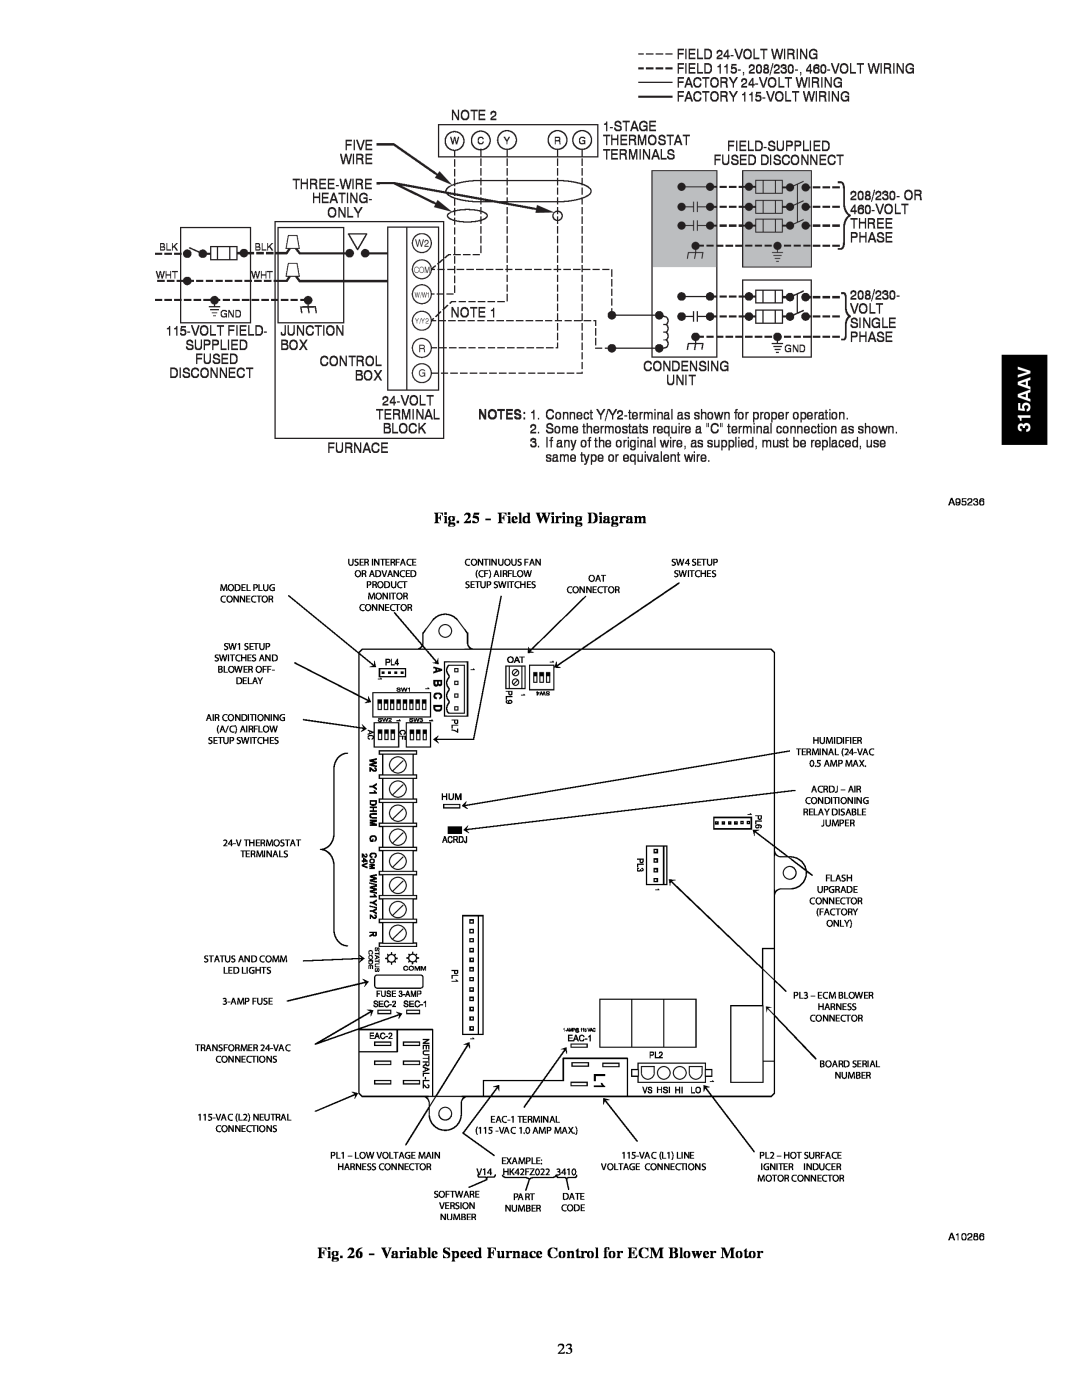 Bryant 315AAV instruction manual Field Wiring Diagram 